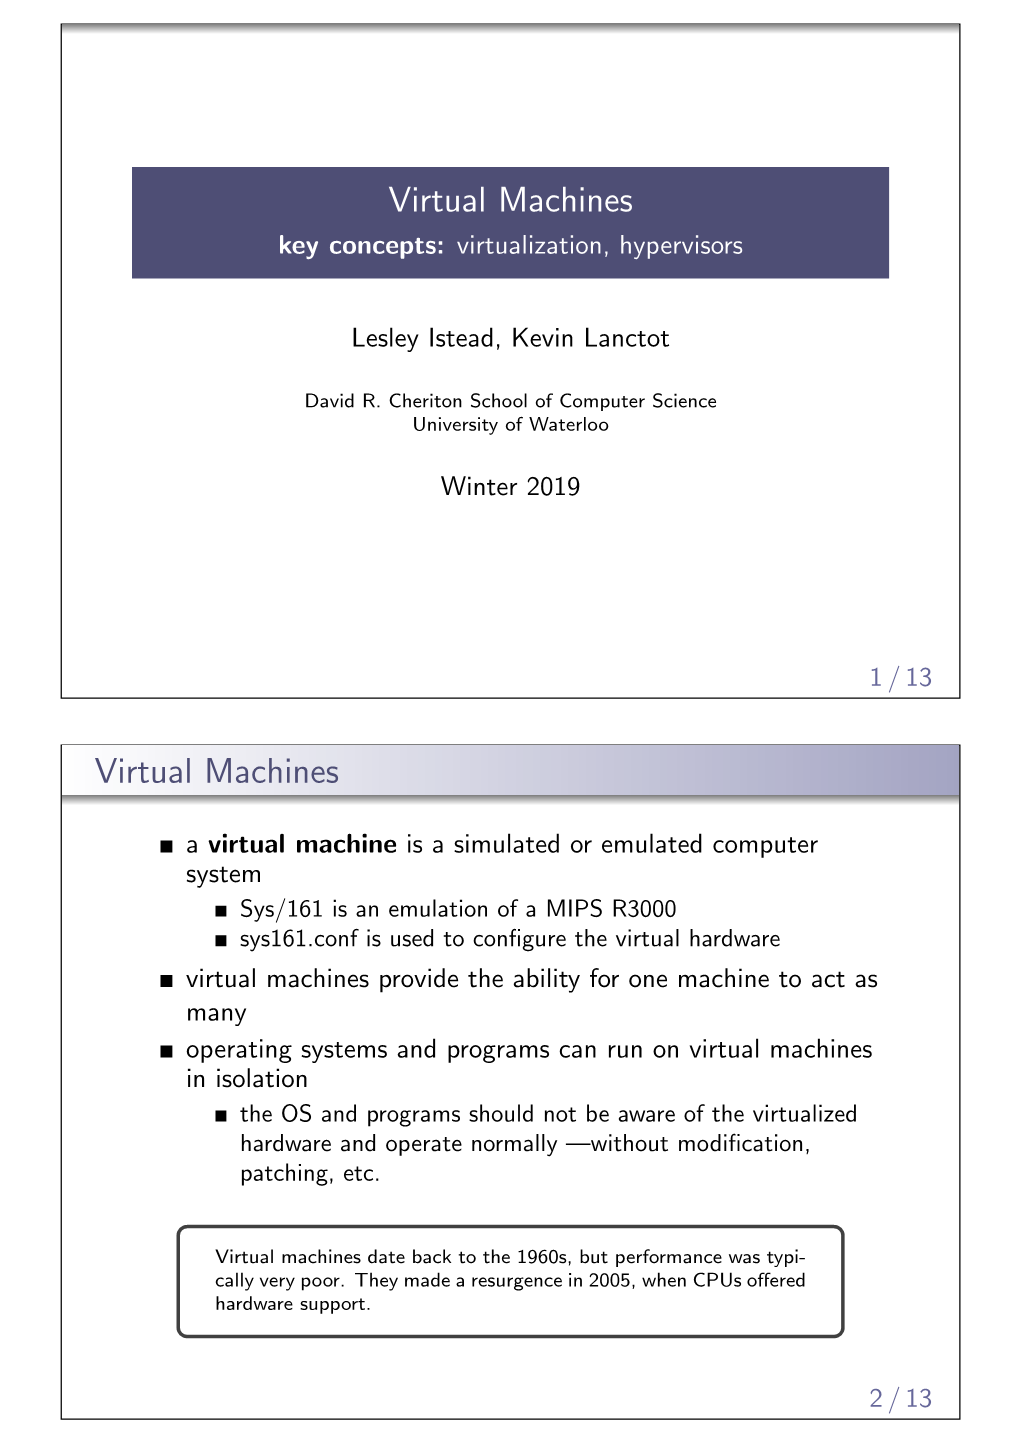 Virtual Machines Key Concepts: Virtualization, Hypervisors